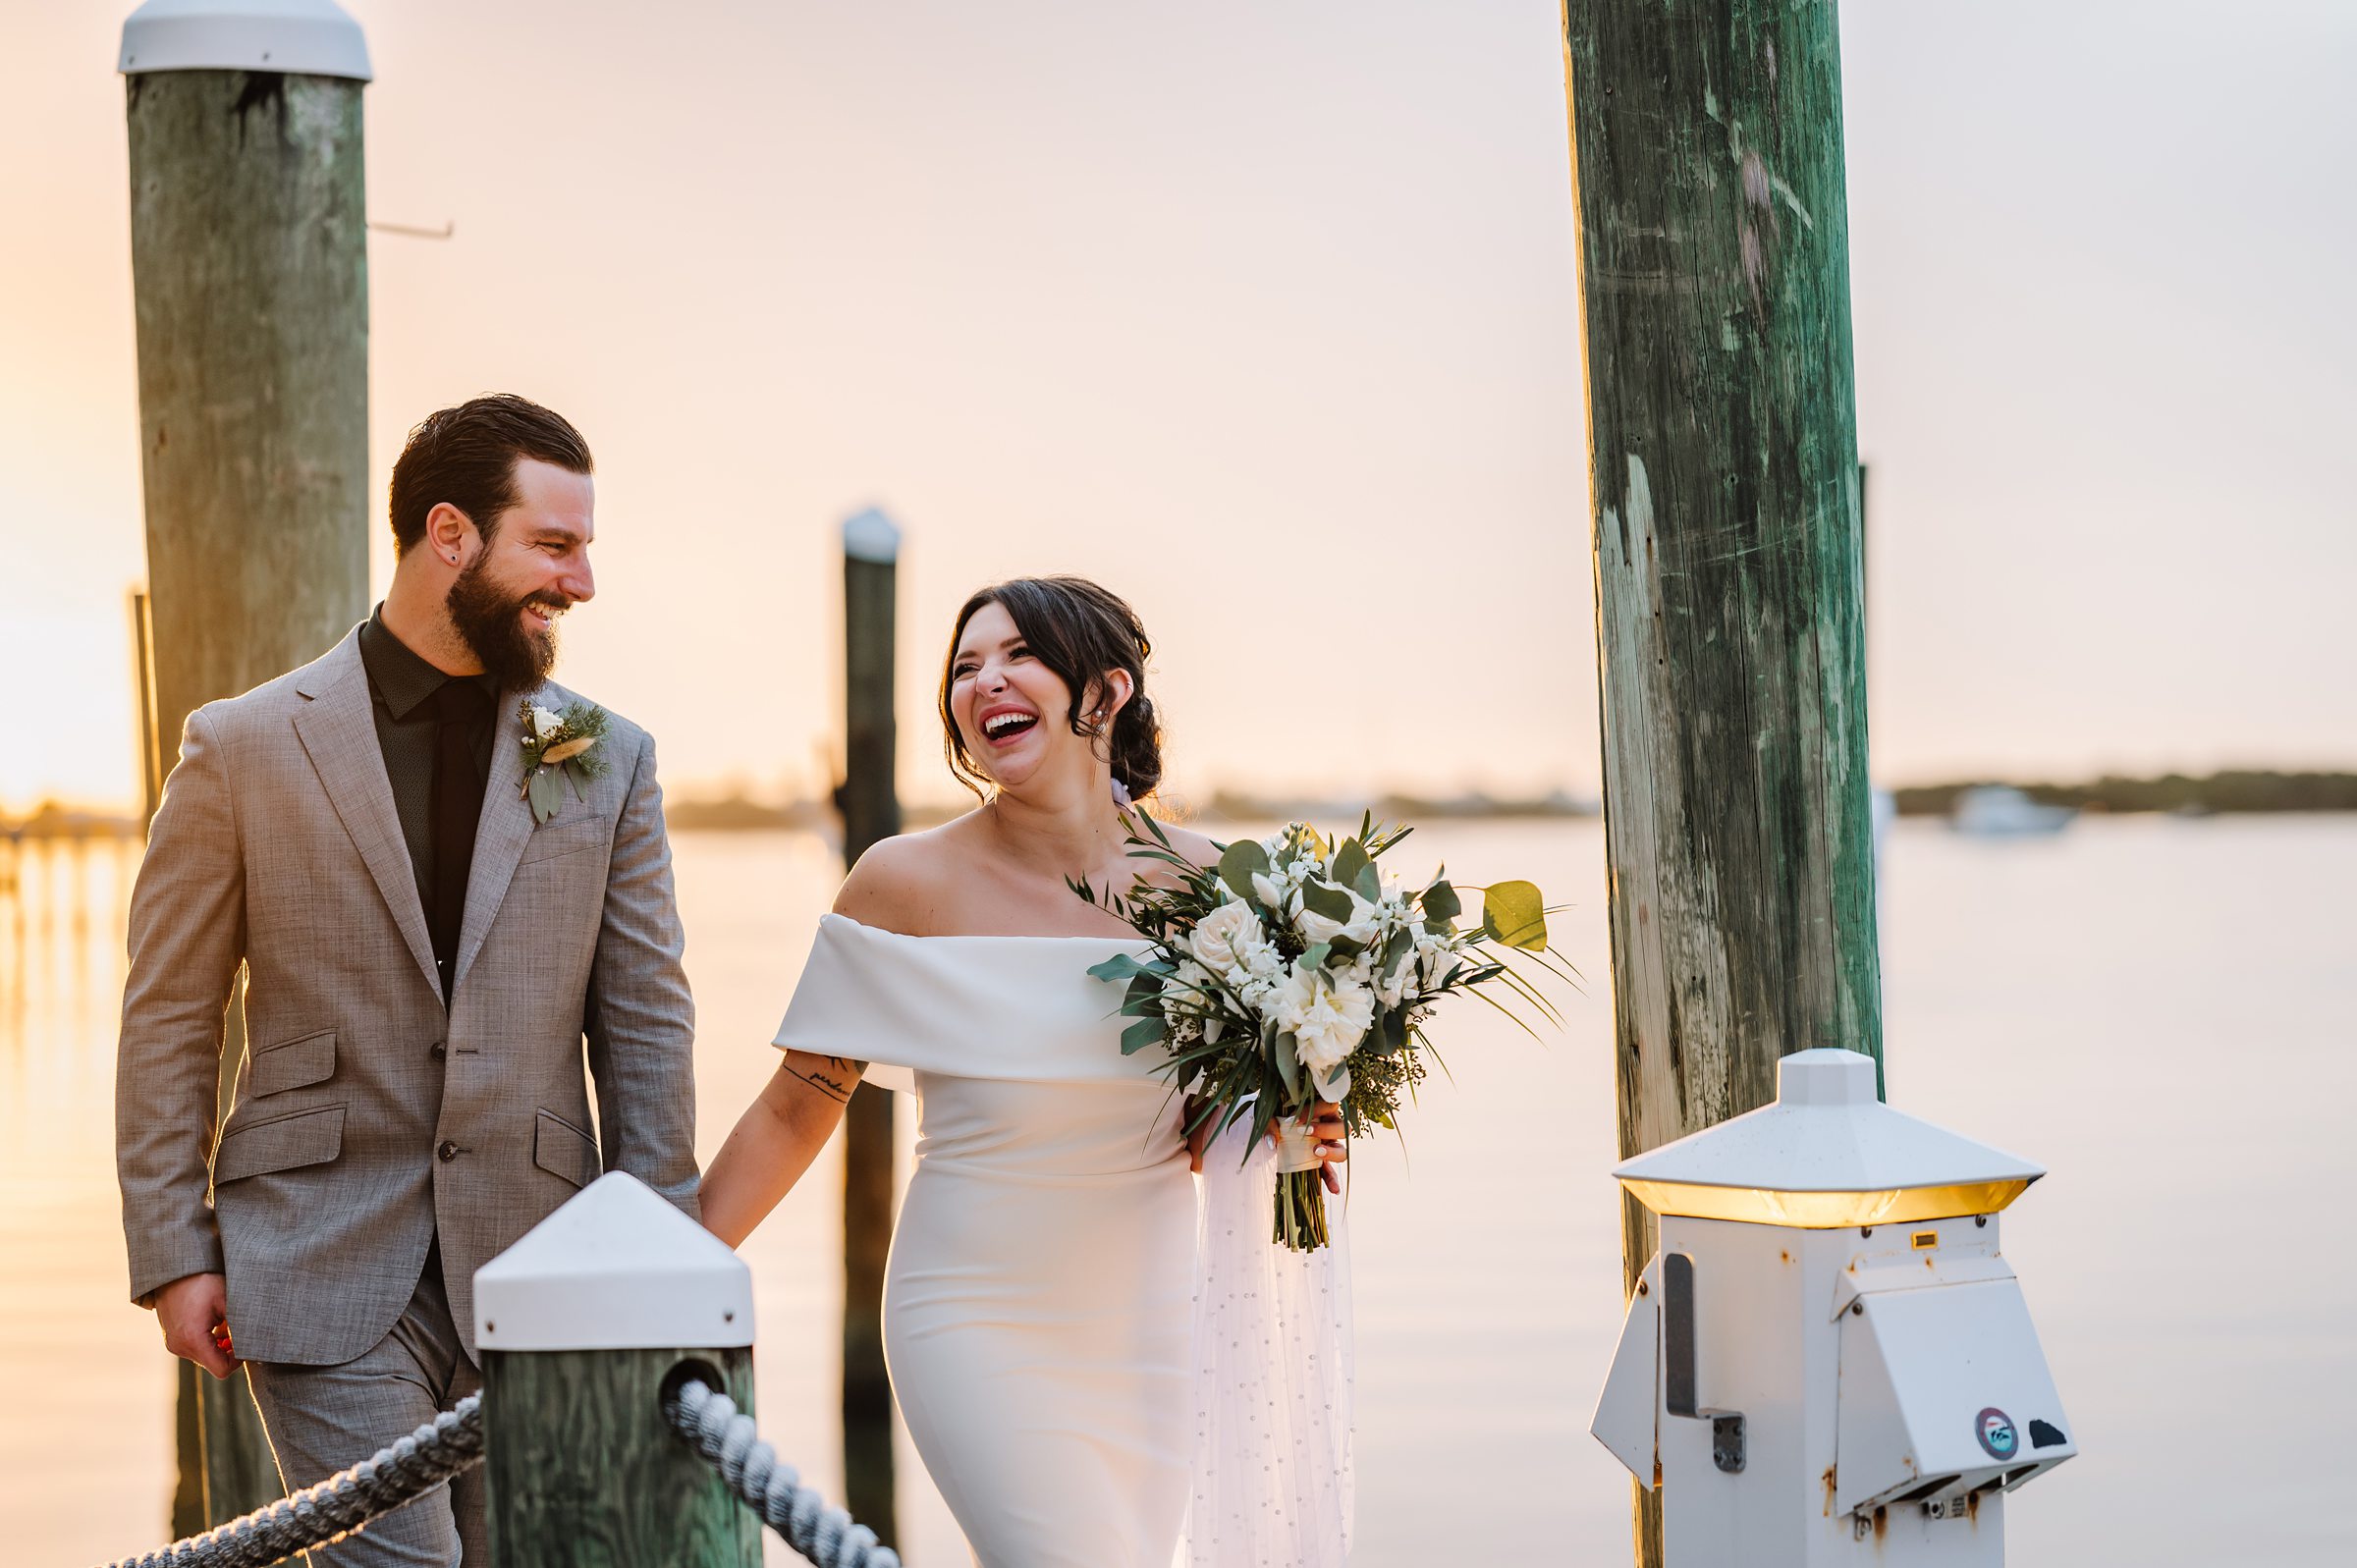 Newlyweds walking on a Dream Bay Resort dock overlooking the Florida Keys waters.